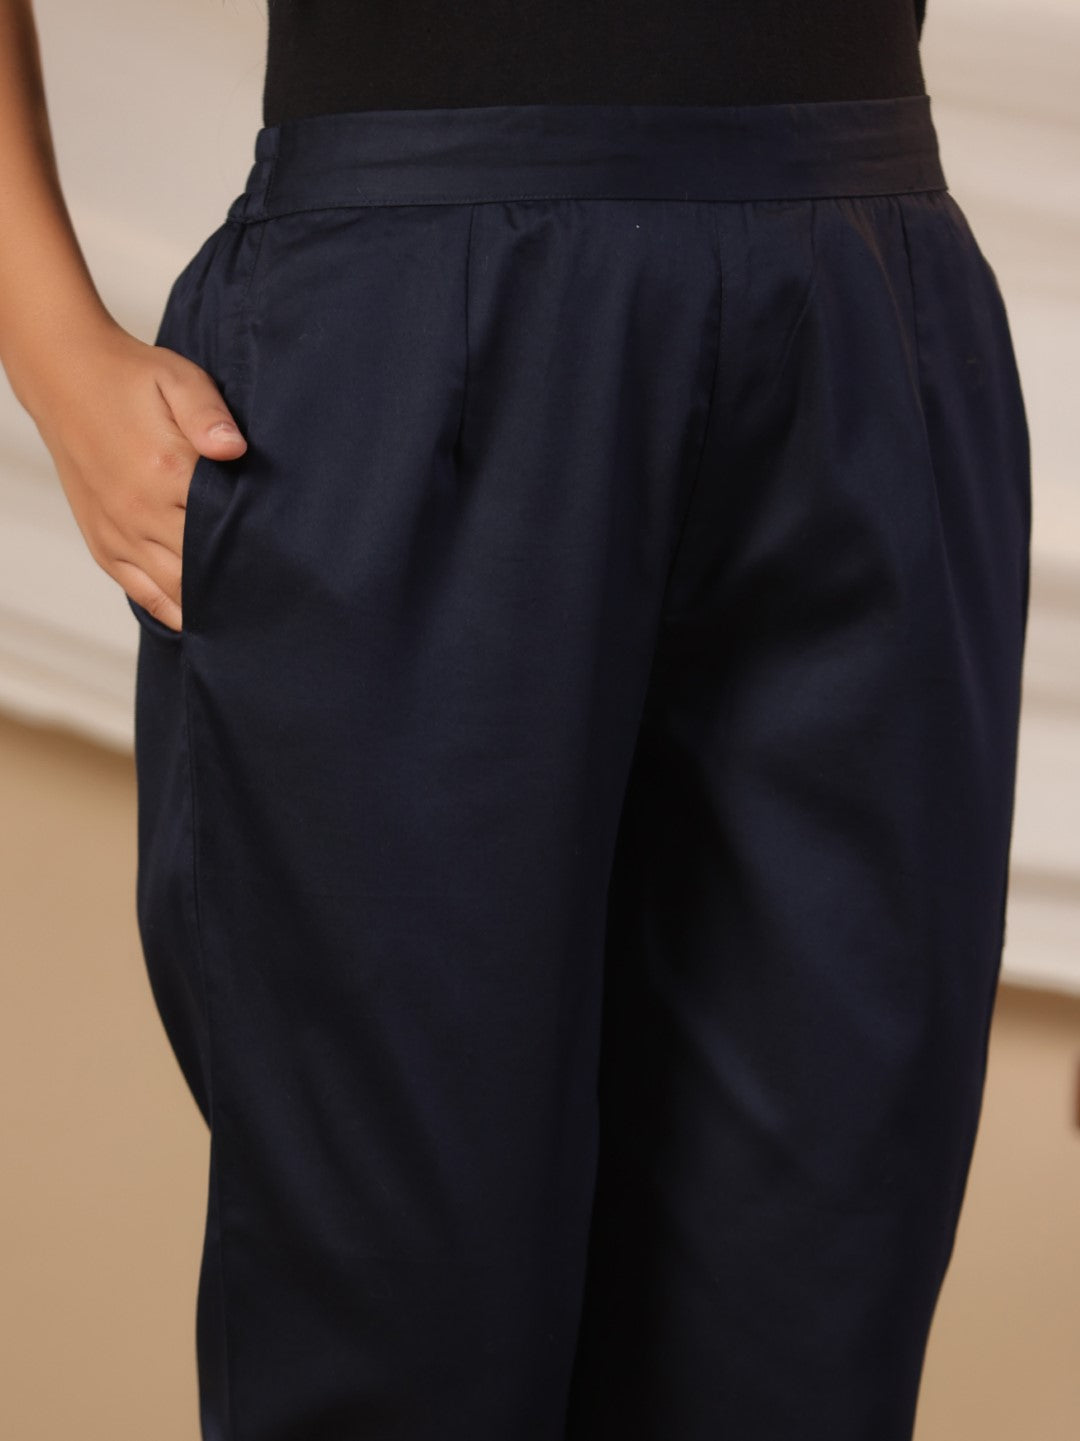 Juniper Blue Solid Lycra Women Drawstring Pants With Single Side Pocket